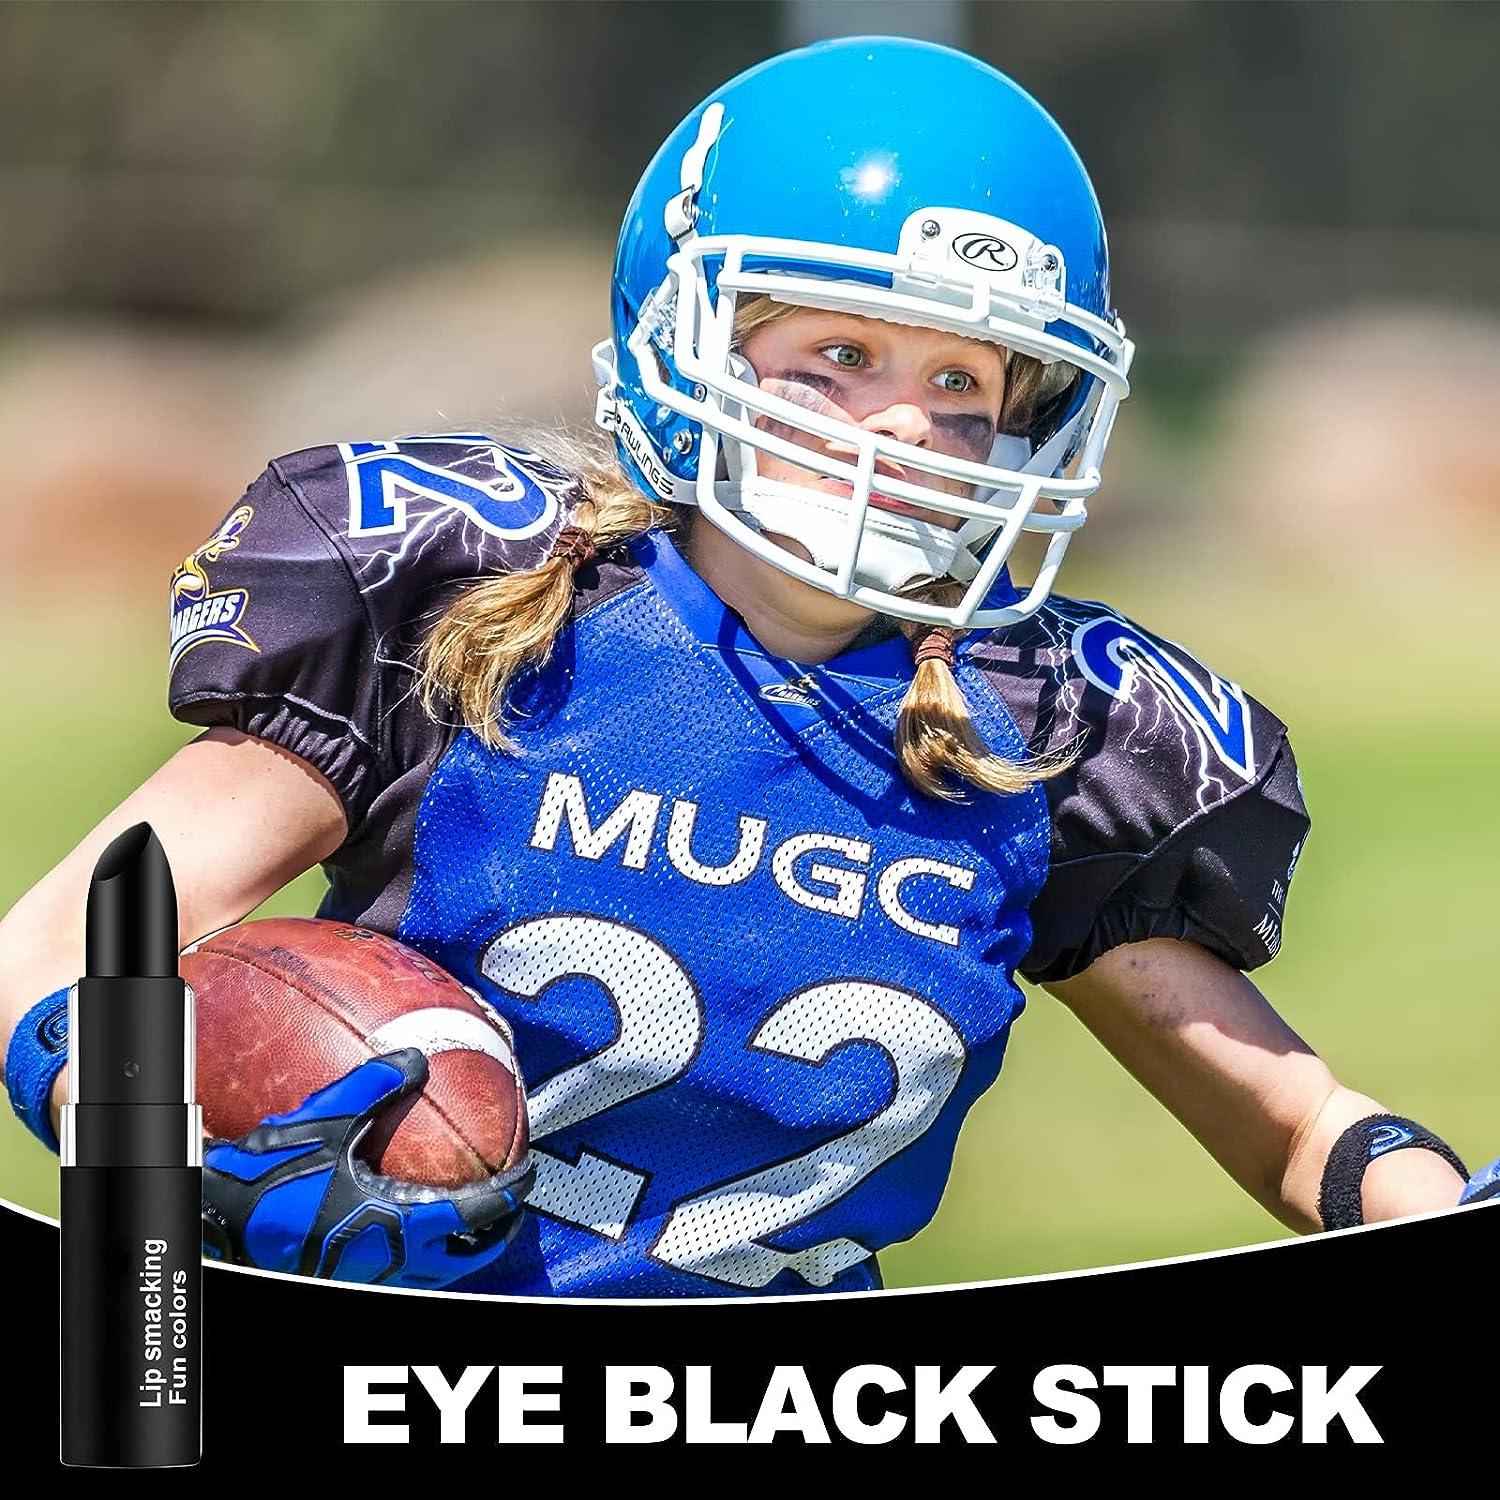  Football Stick Sports Eye Stick, Black Face Body Paint